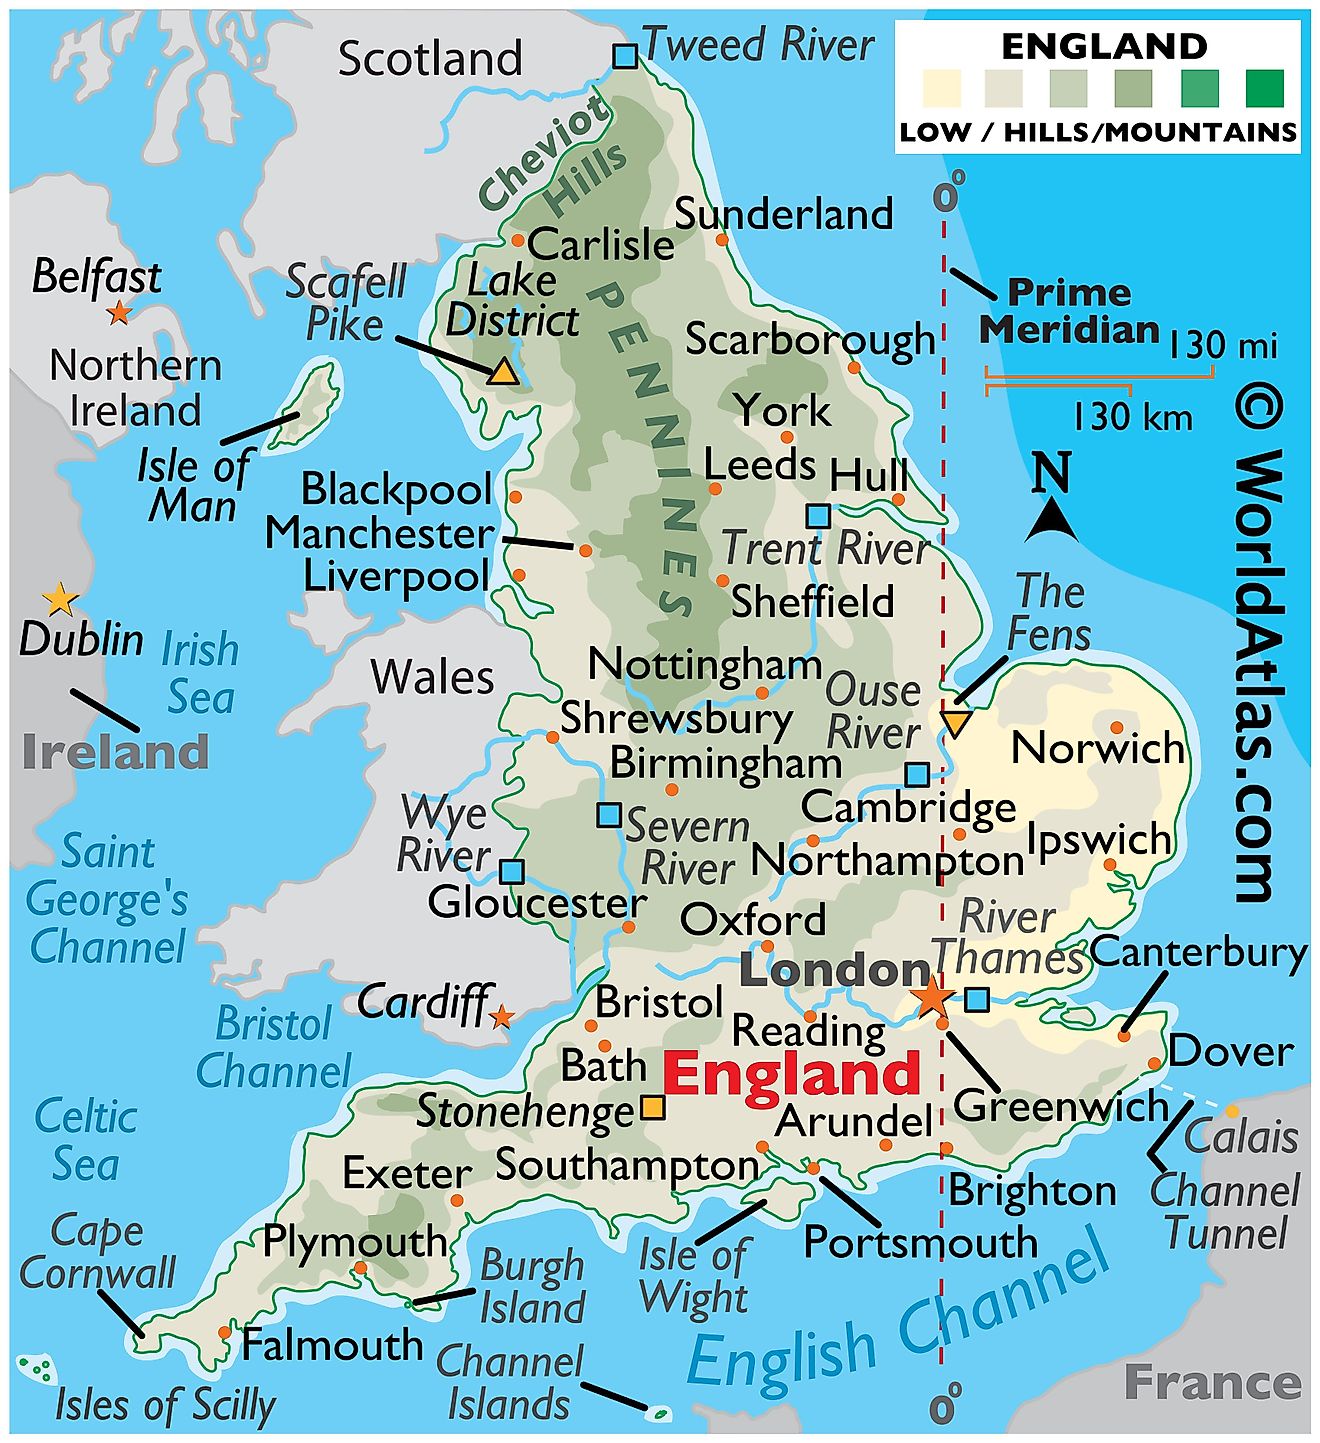 England Maps Facts World Atlas